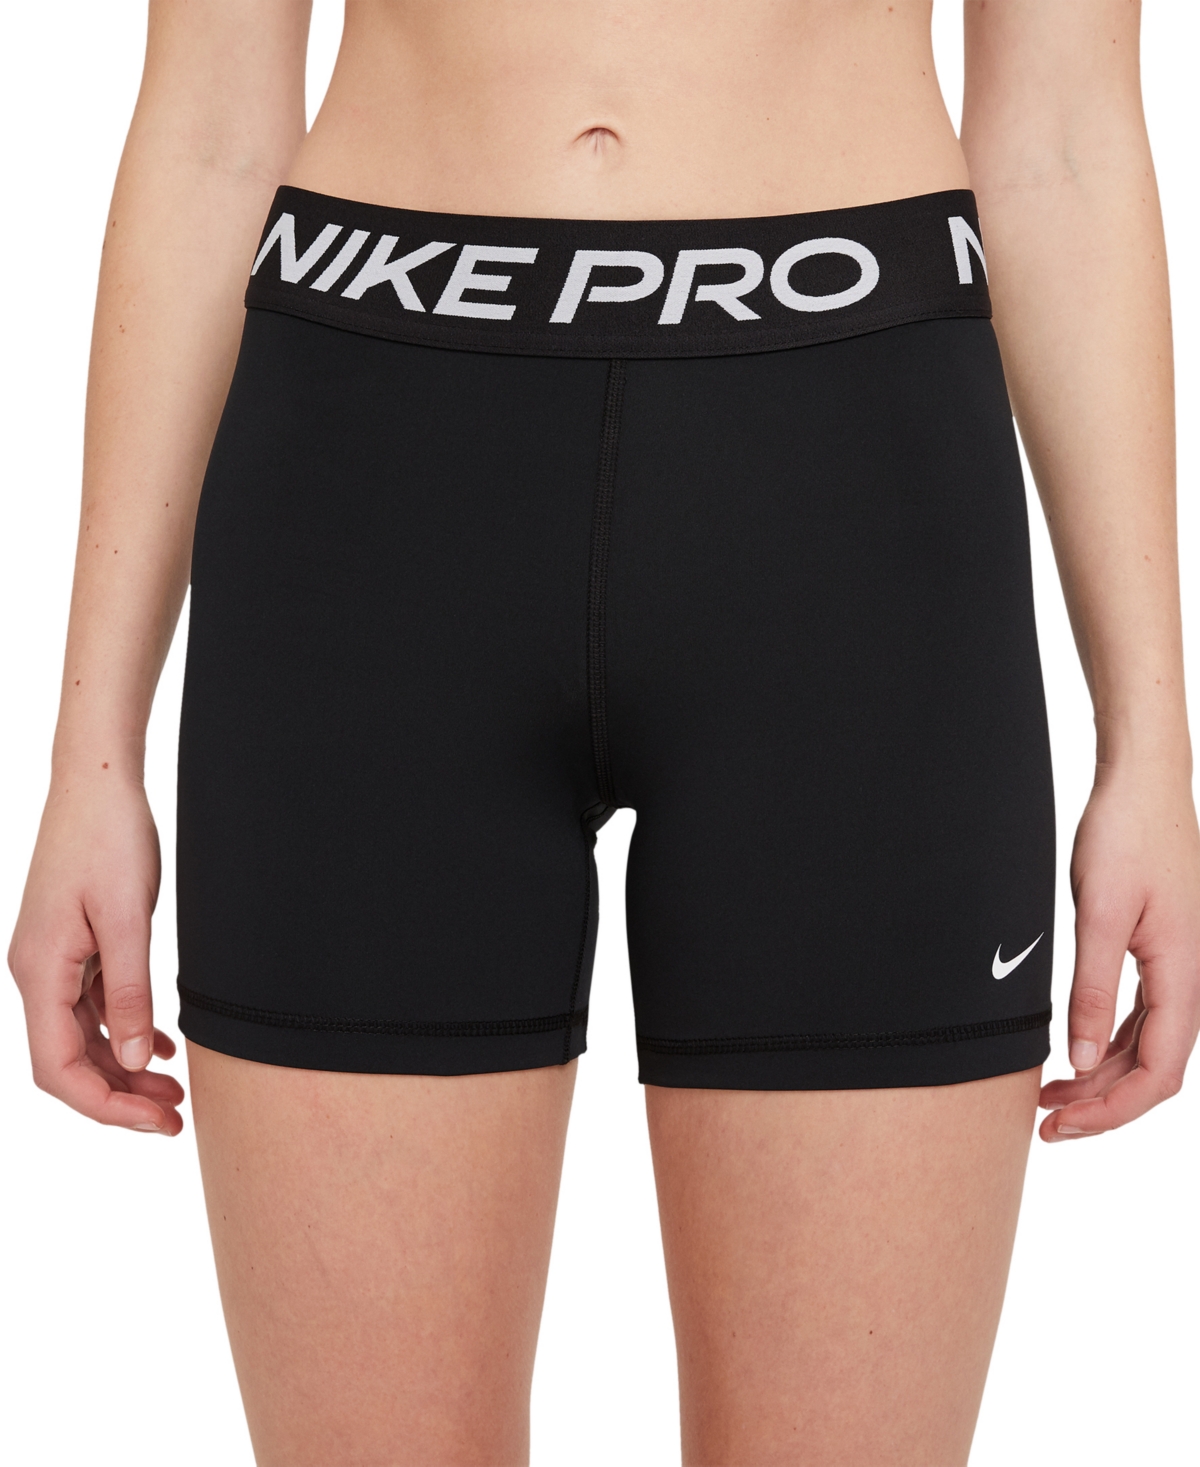 Pro 365 Women's 5" Shorts - Black/white